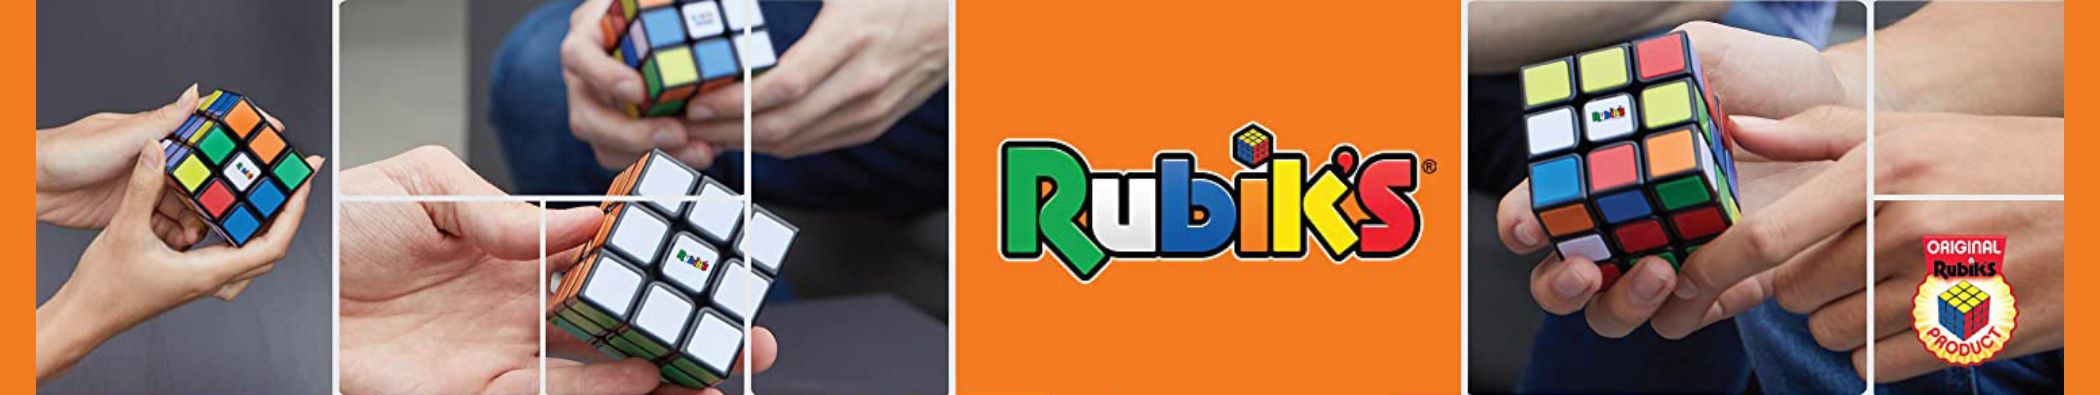 Joguines Rubik's